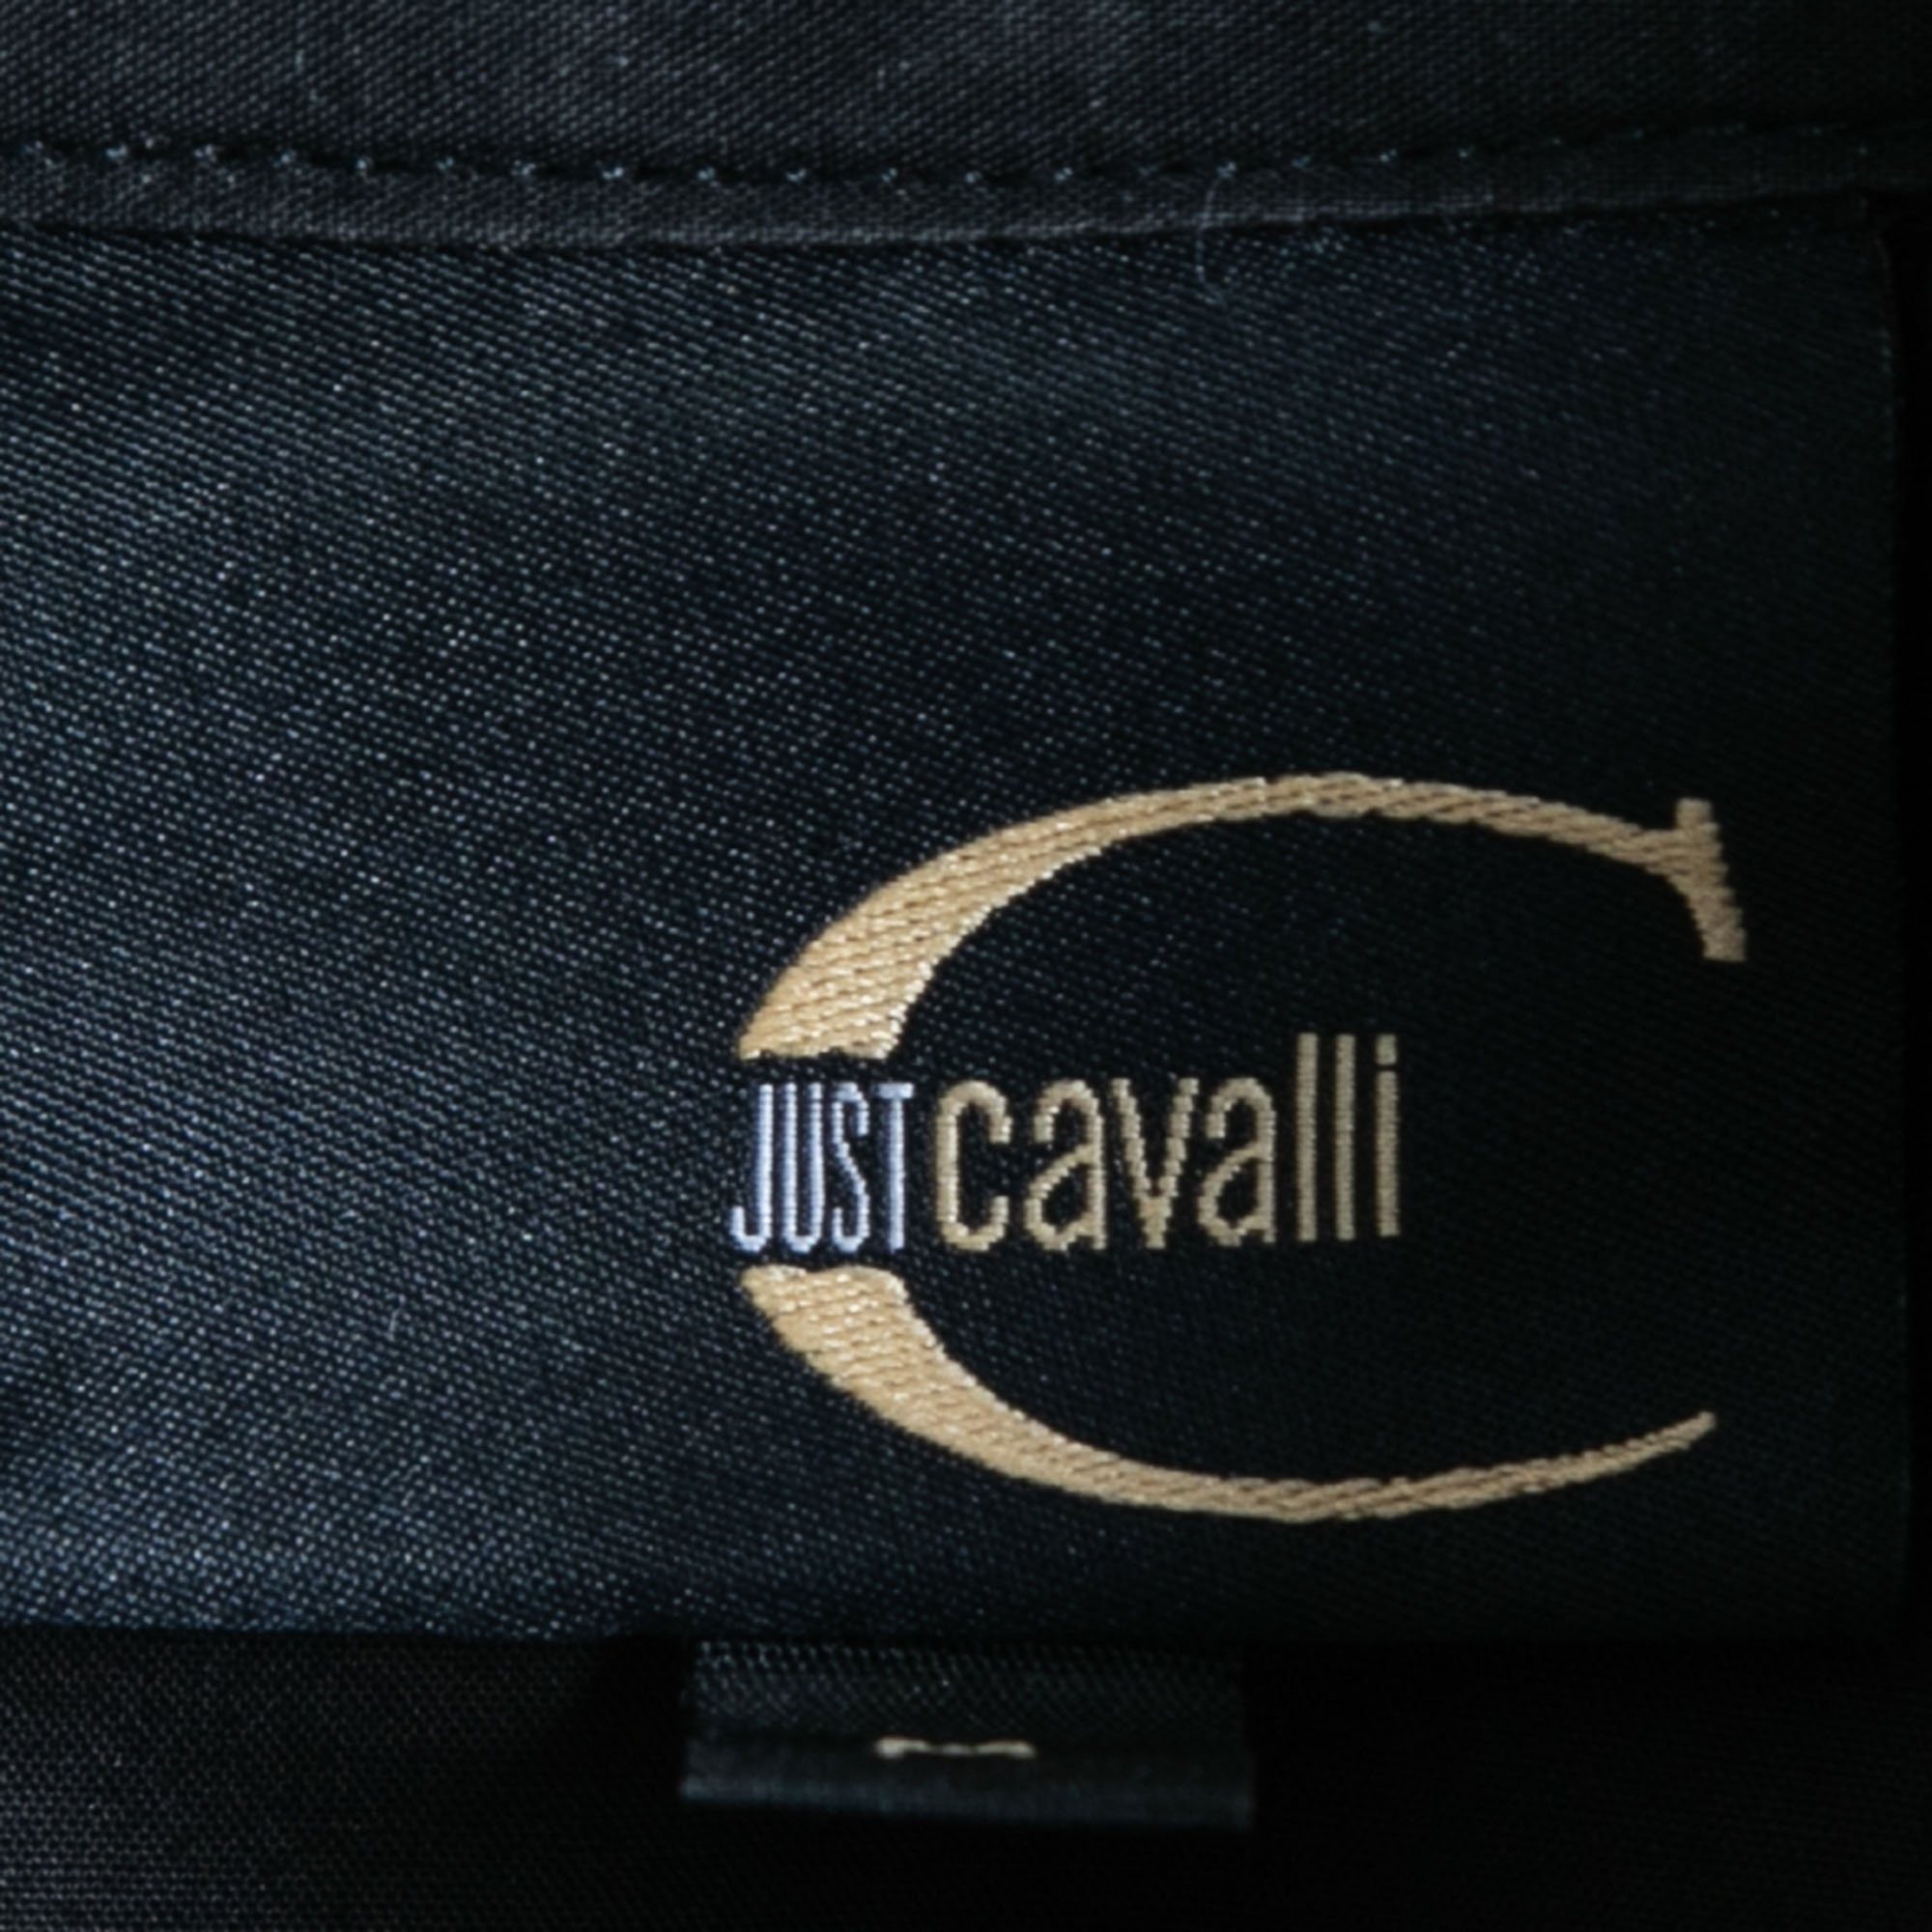 Just Cavalli Black Cotton Logo Crest Embroidered Shirt M